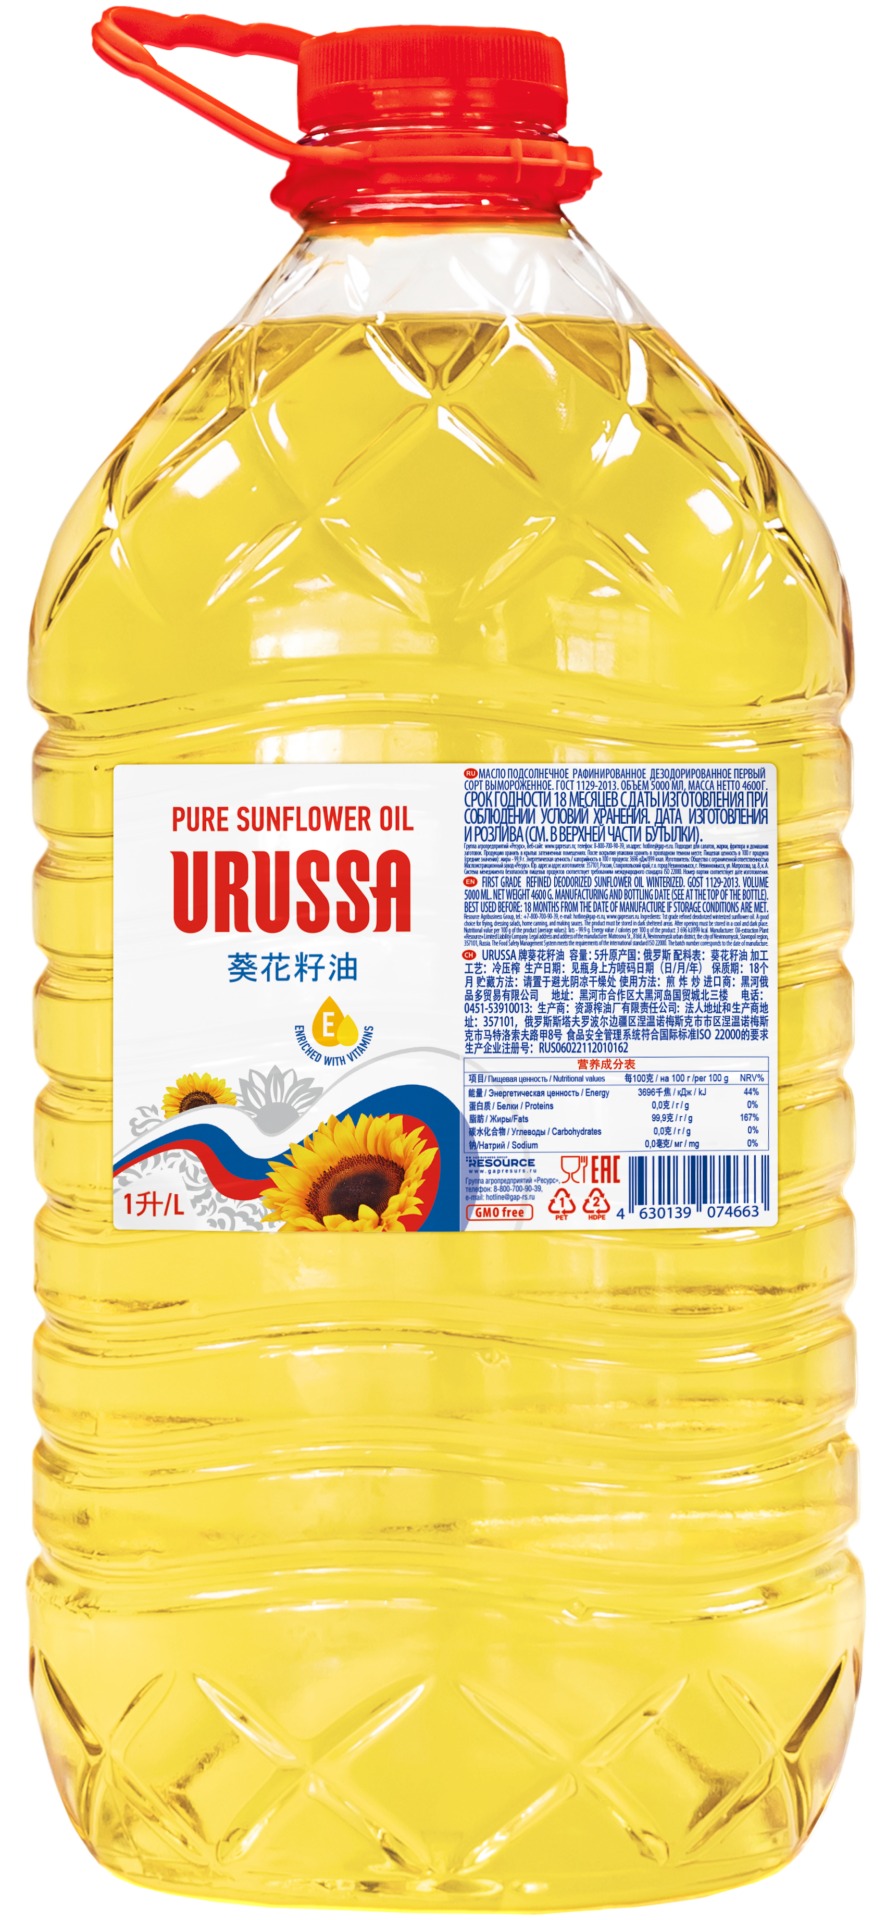 1129 2013 масло подсолнечное. ТМ "Urussa" масло. Urussa масло подсолнечное 5л. Масло ГОСТ 1129-2013. Sunflower Oil PNG.